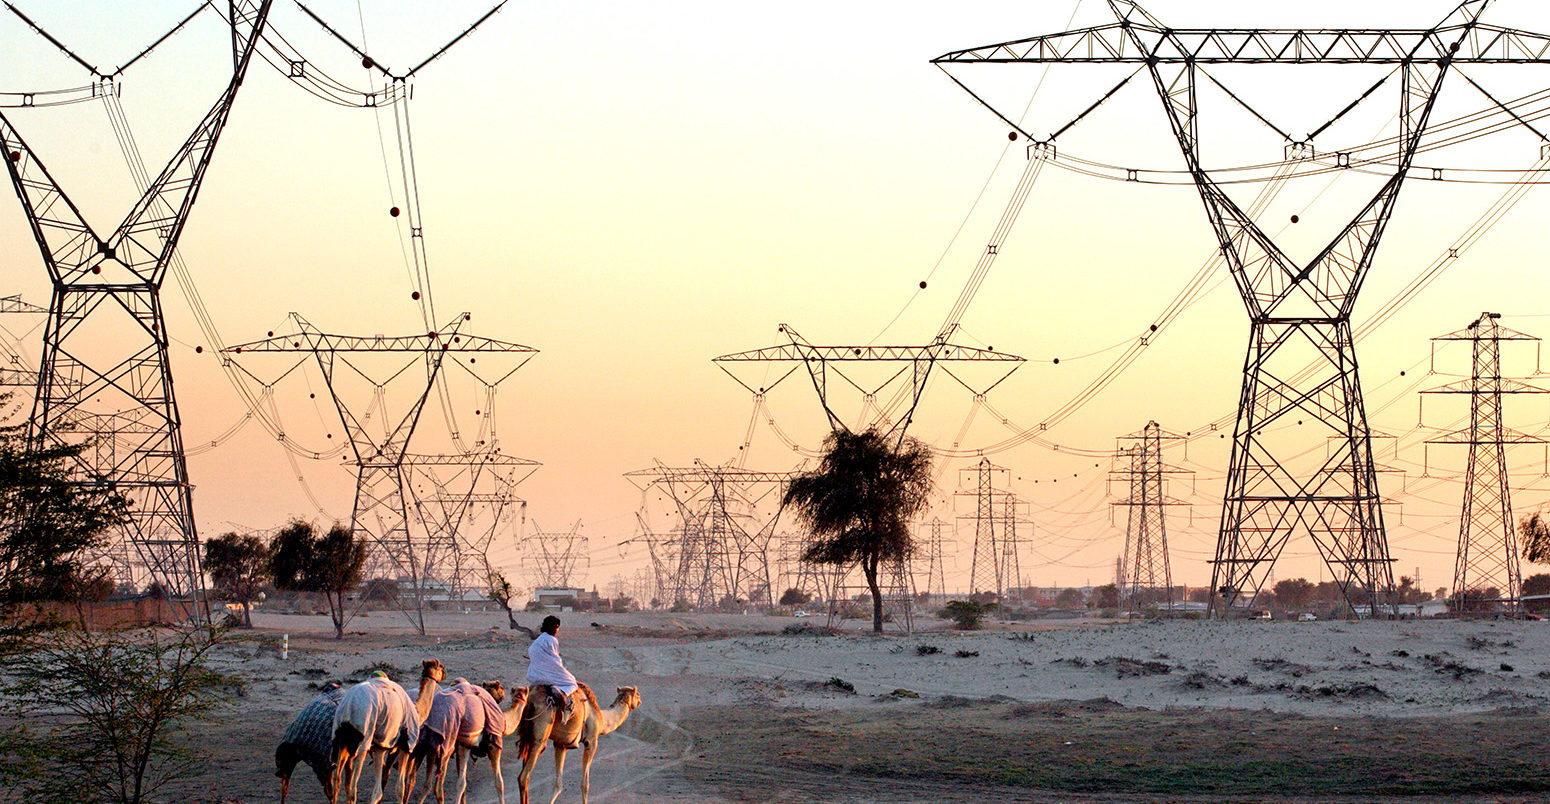 High voltage transmission lines in the desert, Dubai, United Arab Emirates. Credit: Agencja Fotograficzna Caro / Alamy Stock Photo. A6JFAW